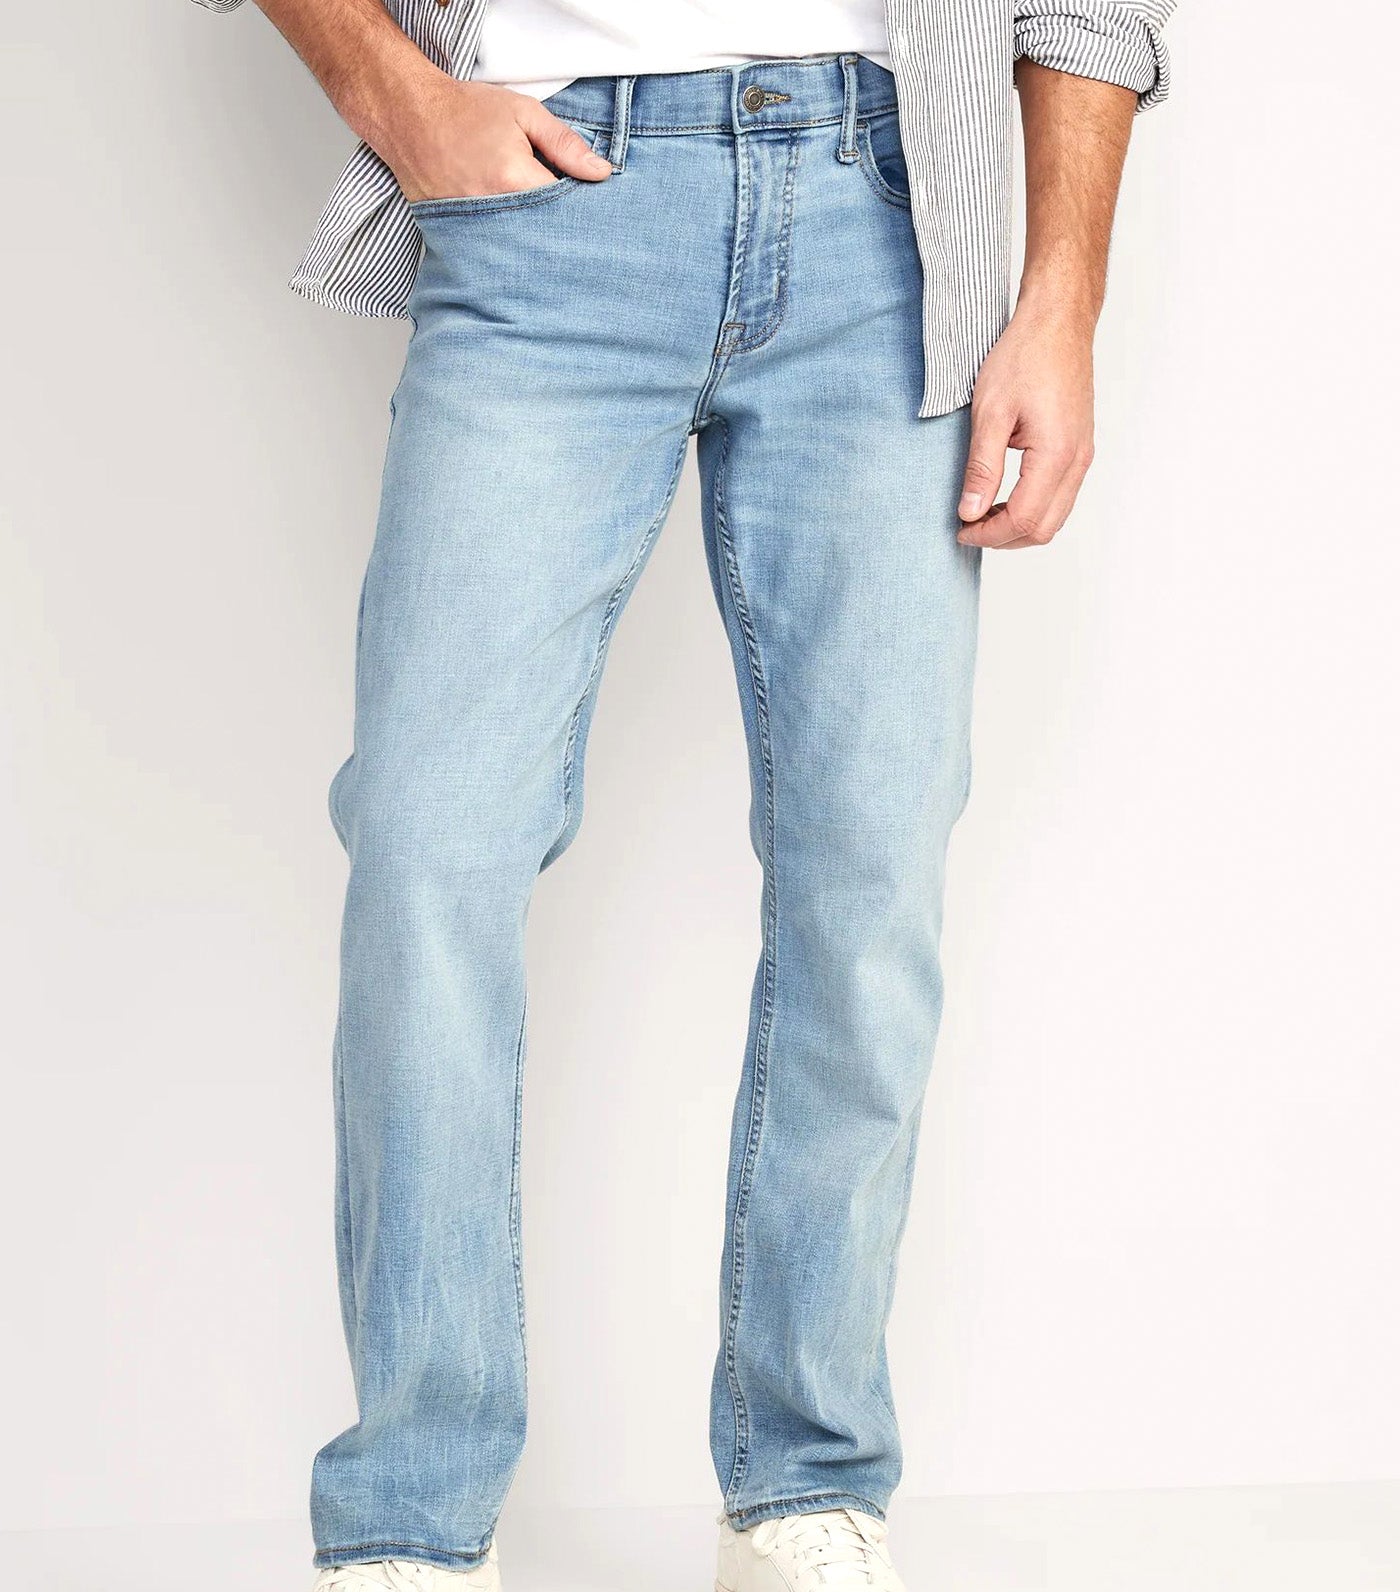 Old Navy Stretch Slim Dark Wash Jeans Mens Size 36x32 Blue RN 54023